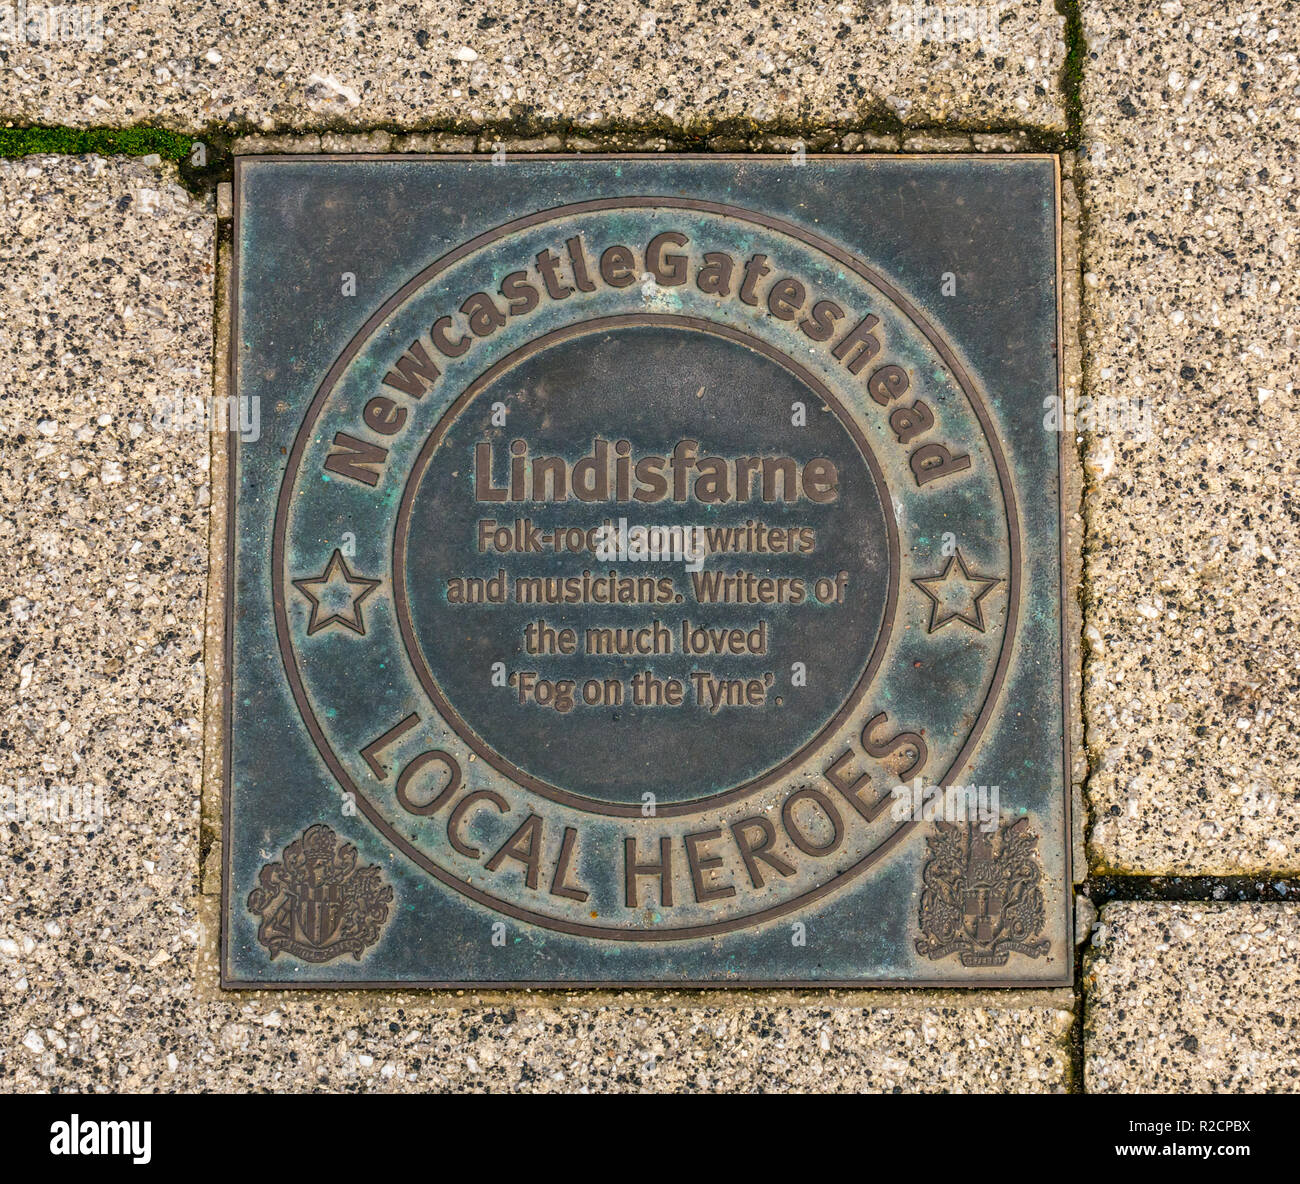 Bronze plaque honouring Newcastle and Gateshead inspiring people of past 60 years, Lindisfarne band, Quayside. Newcastle Upon Tyne, England, UK Stock Photo